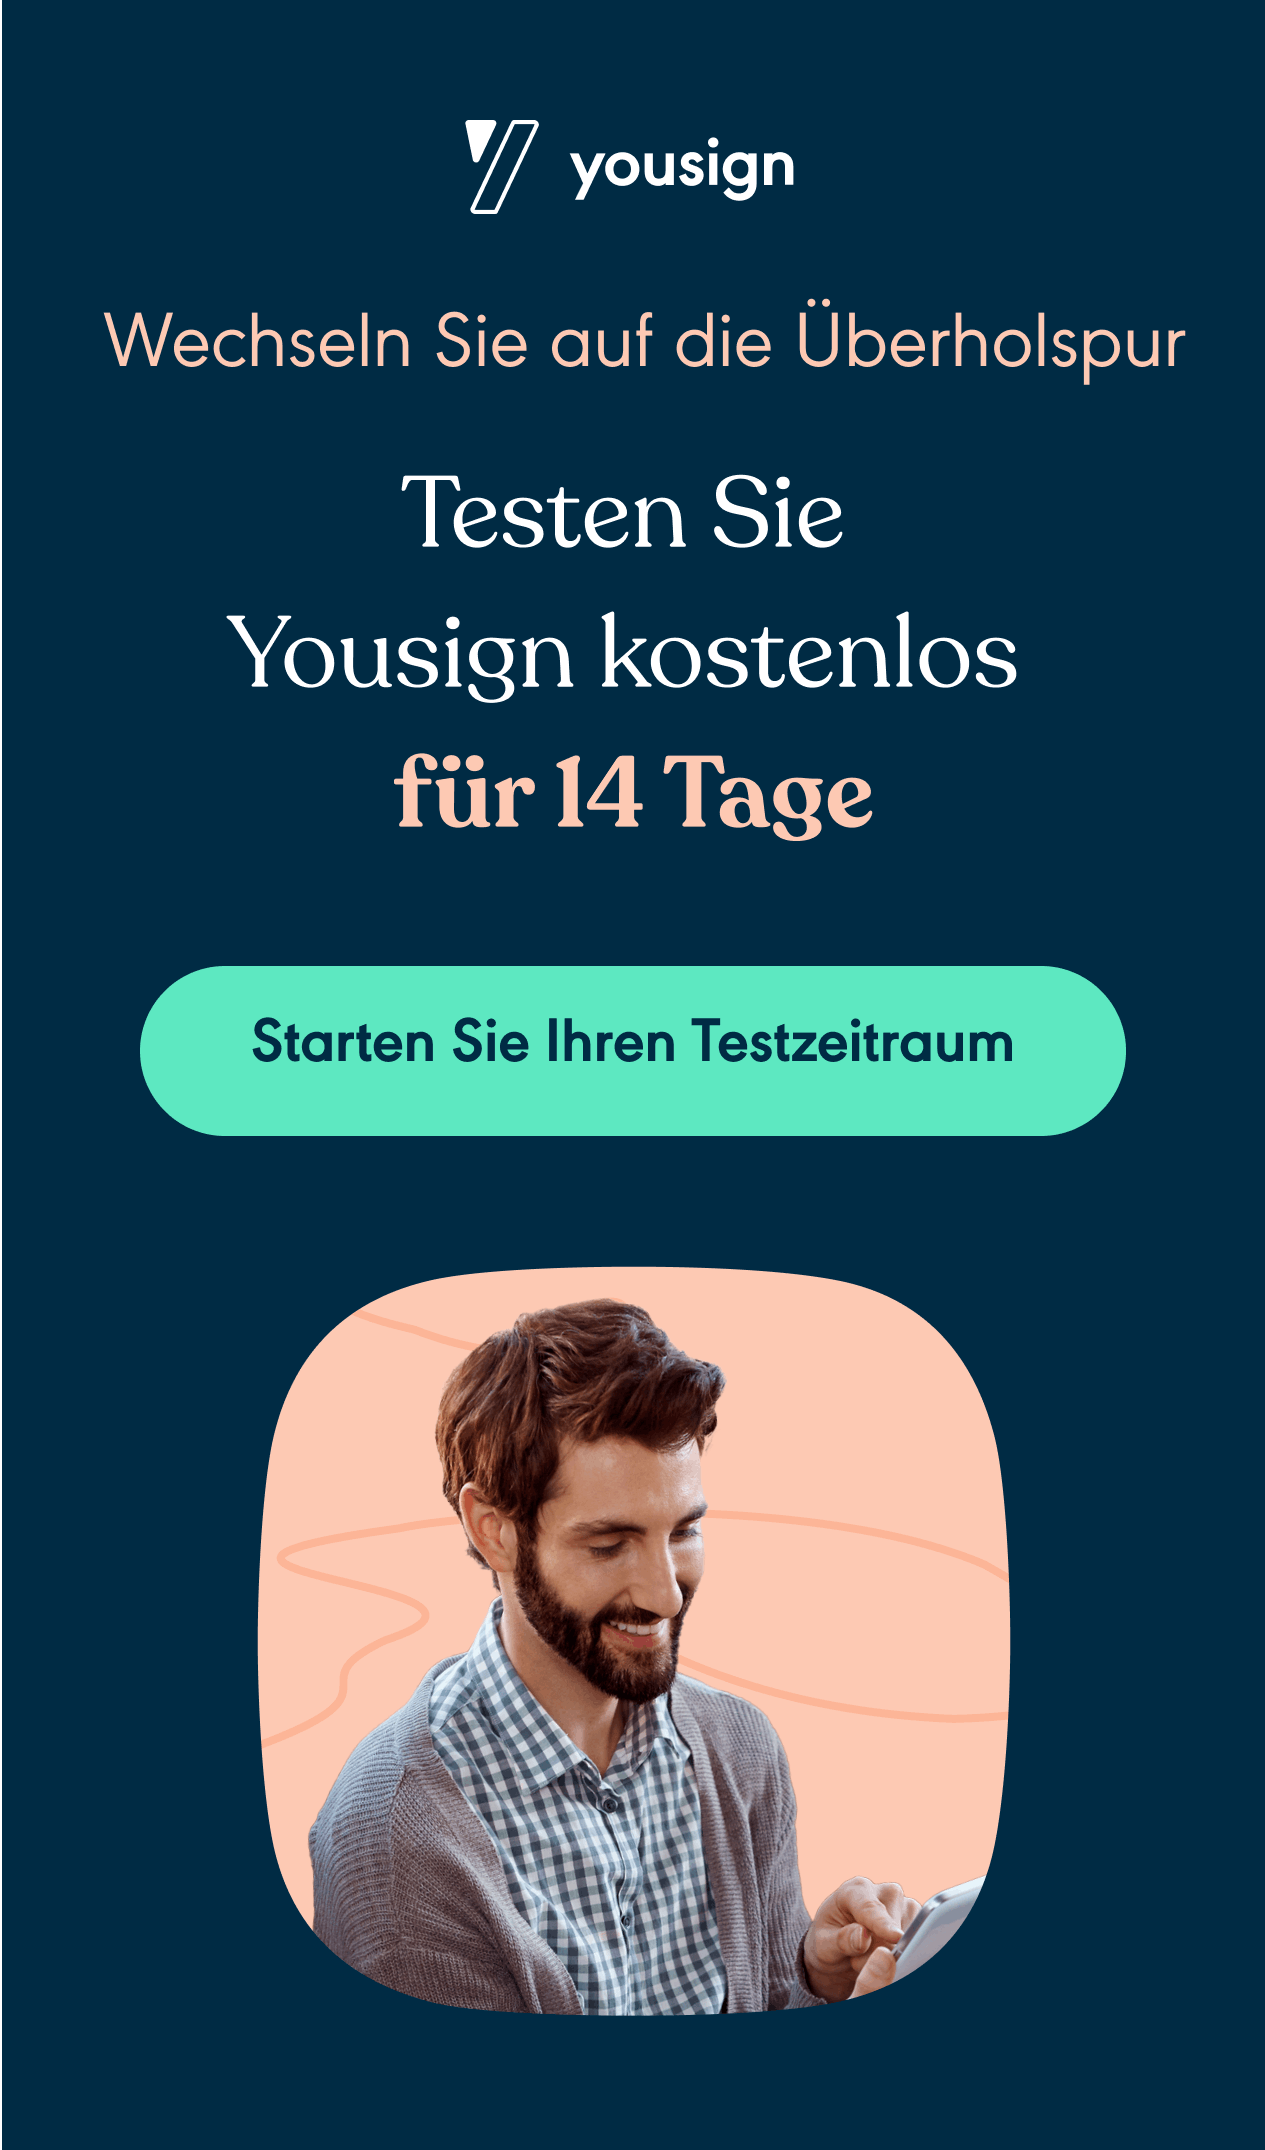 Yousign testen